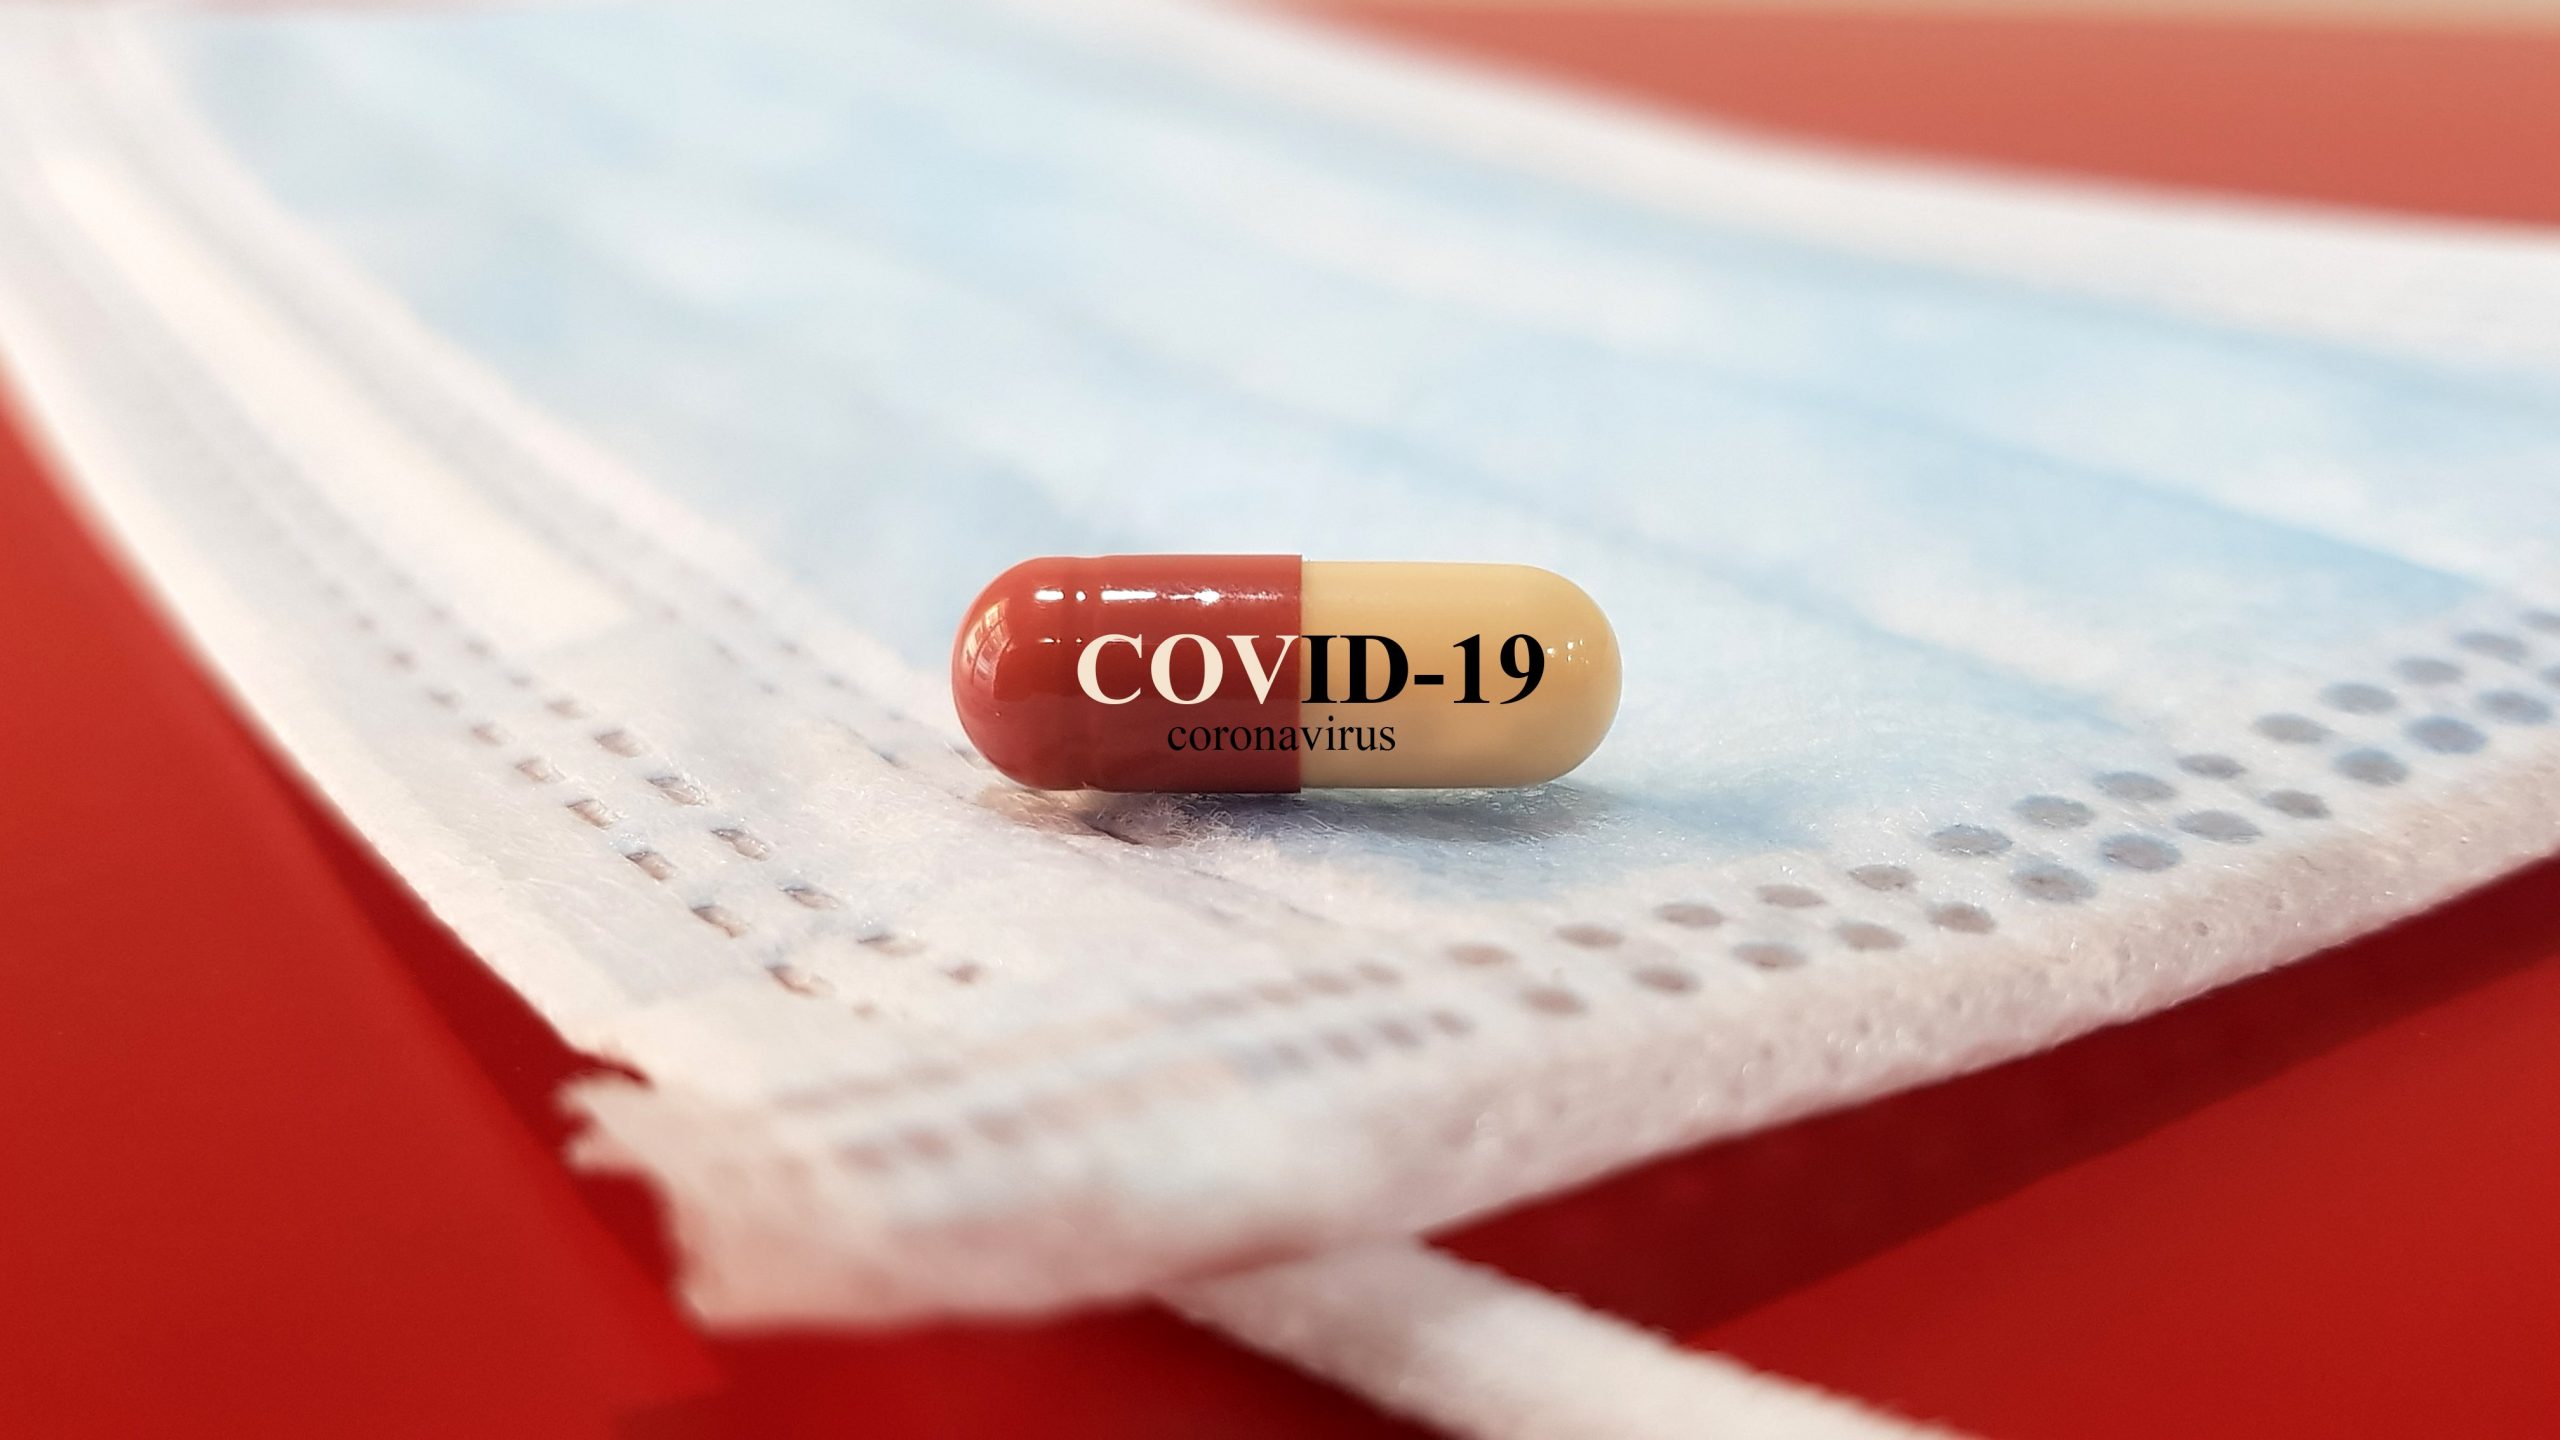 Covid 19 pill by mbdailynews.com